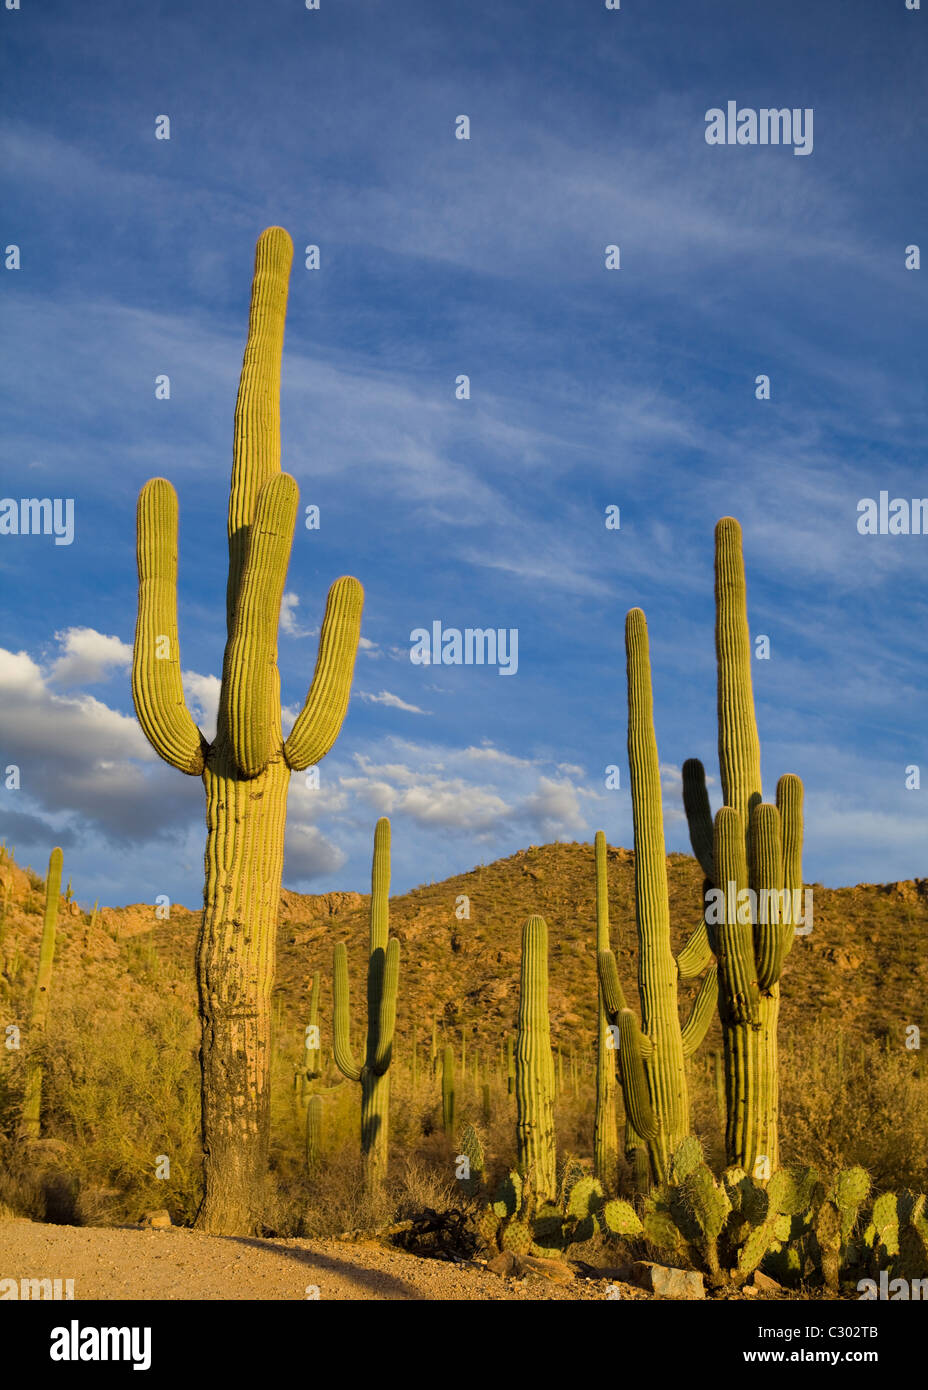 Saguaro cactus field - Saguaro National Park, Arizona USA Stock Photo